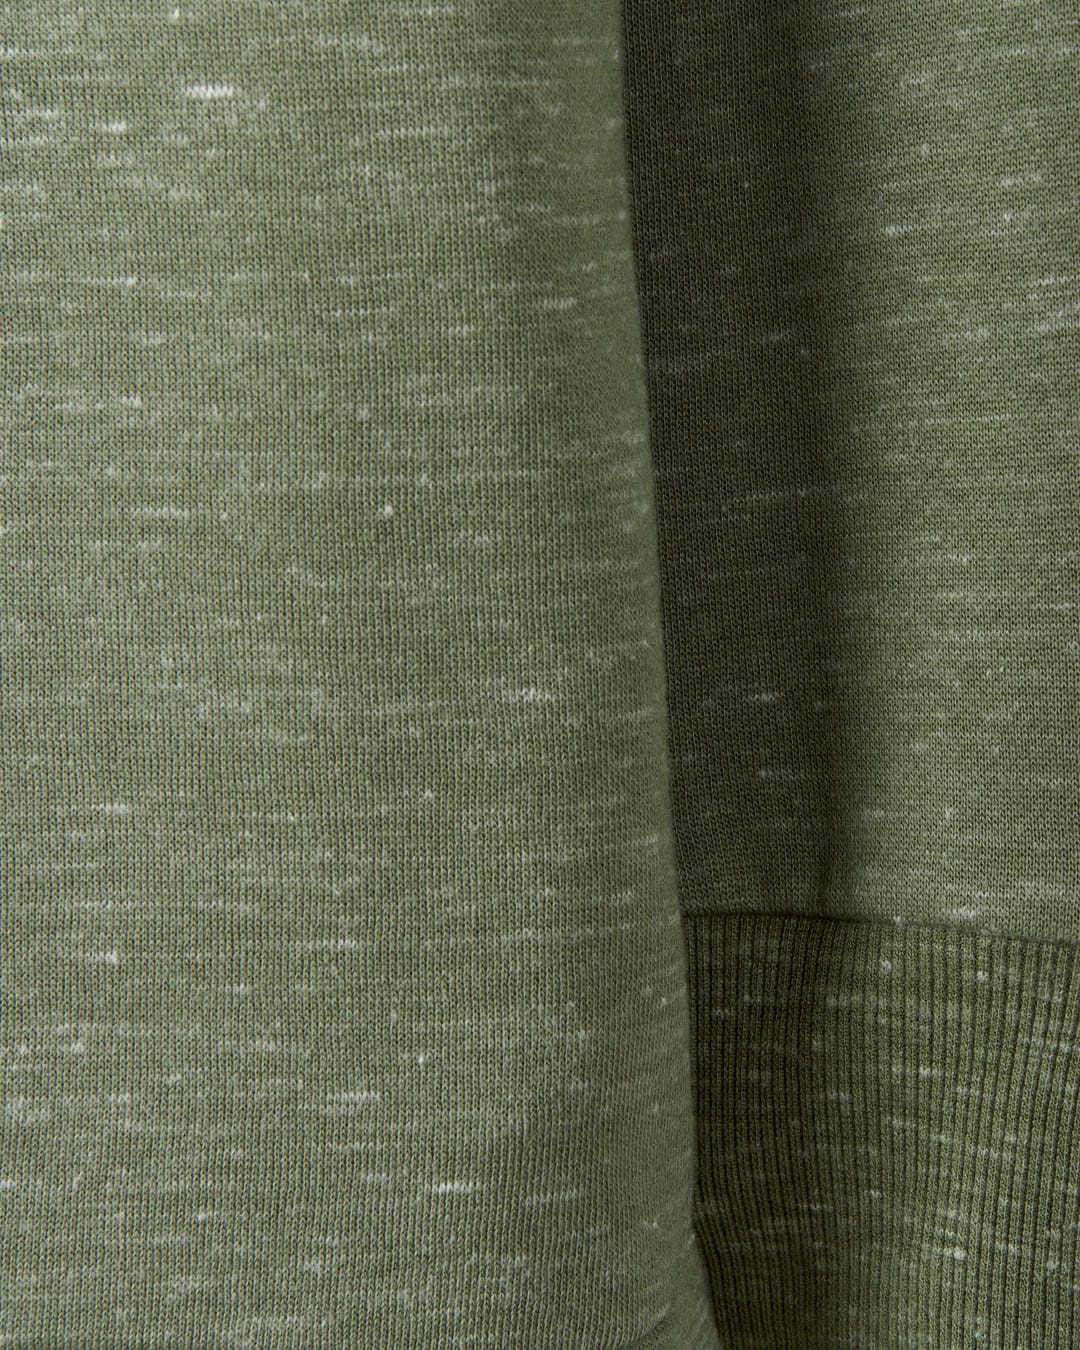 A close up of a Saltrock Harper - Womens Longline Pop Sweat - Green sweatshirt with embroidered branding.